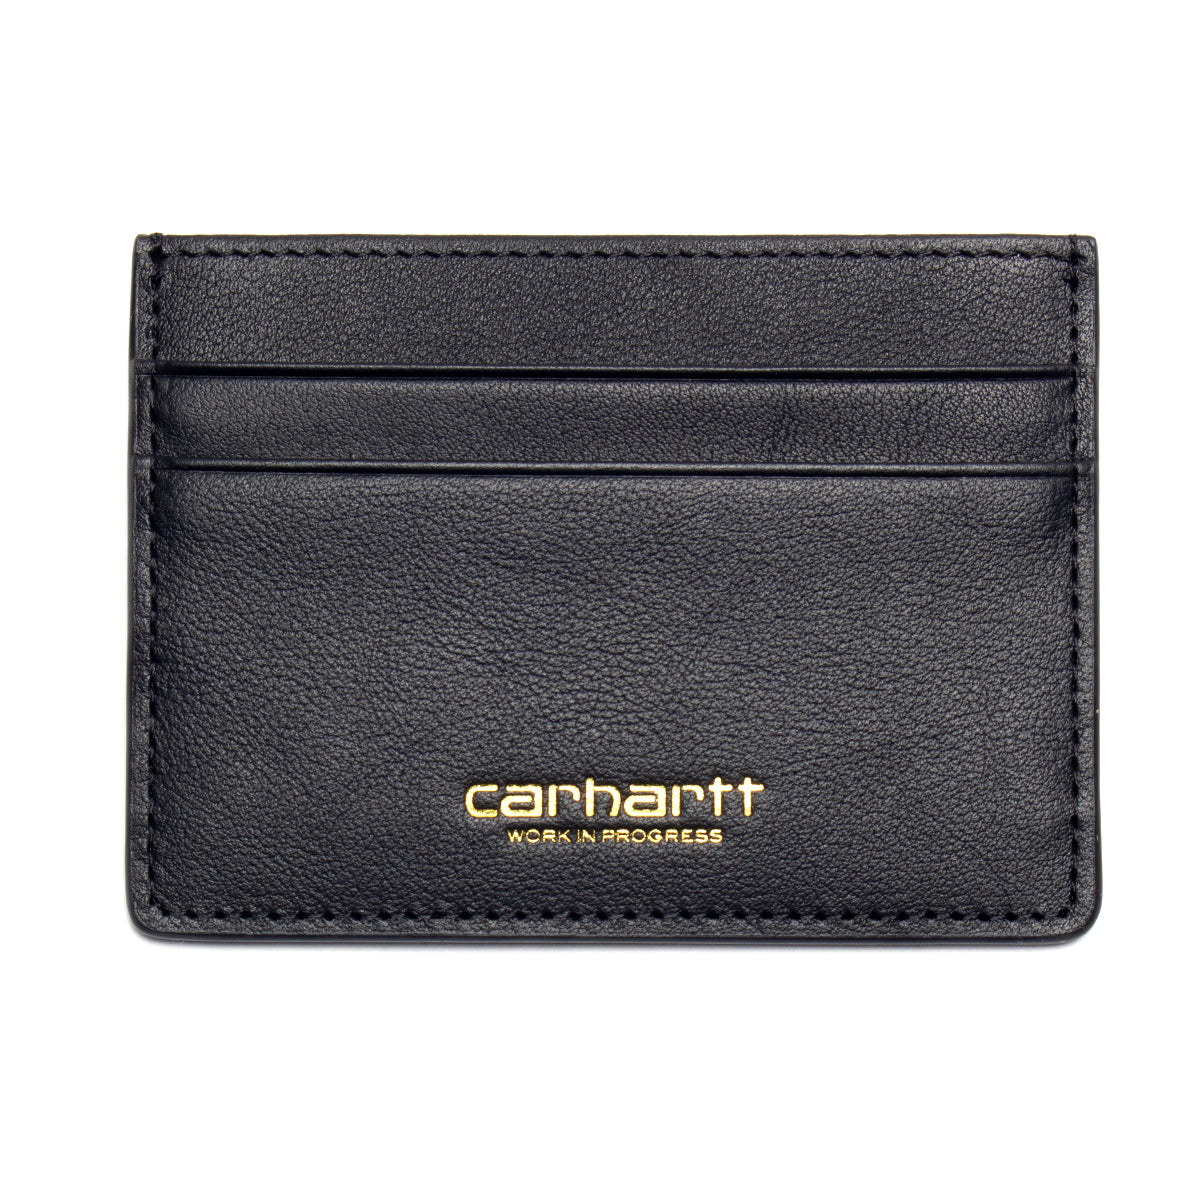 Carhartt WIP | Vegas Cardholder Style # I033109-00F Color : Black / Gold